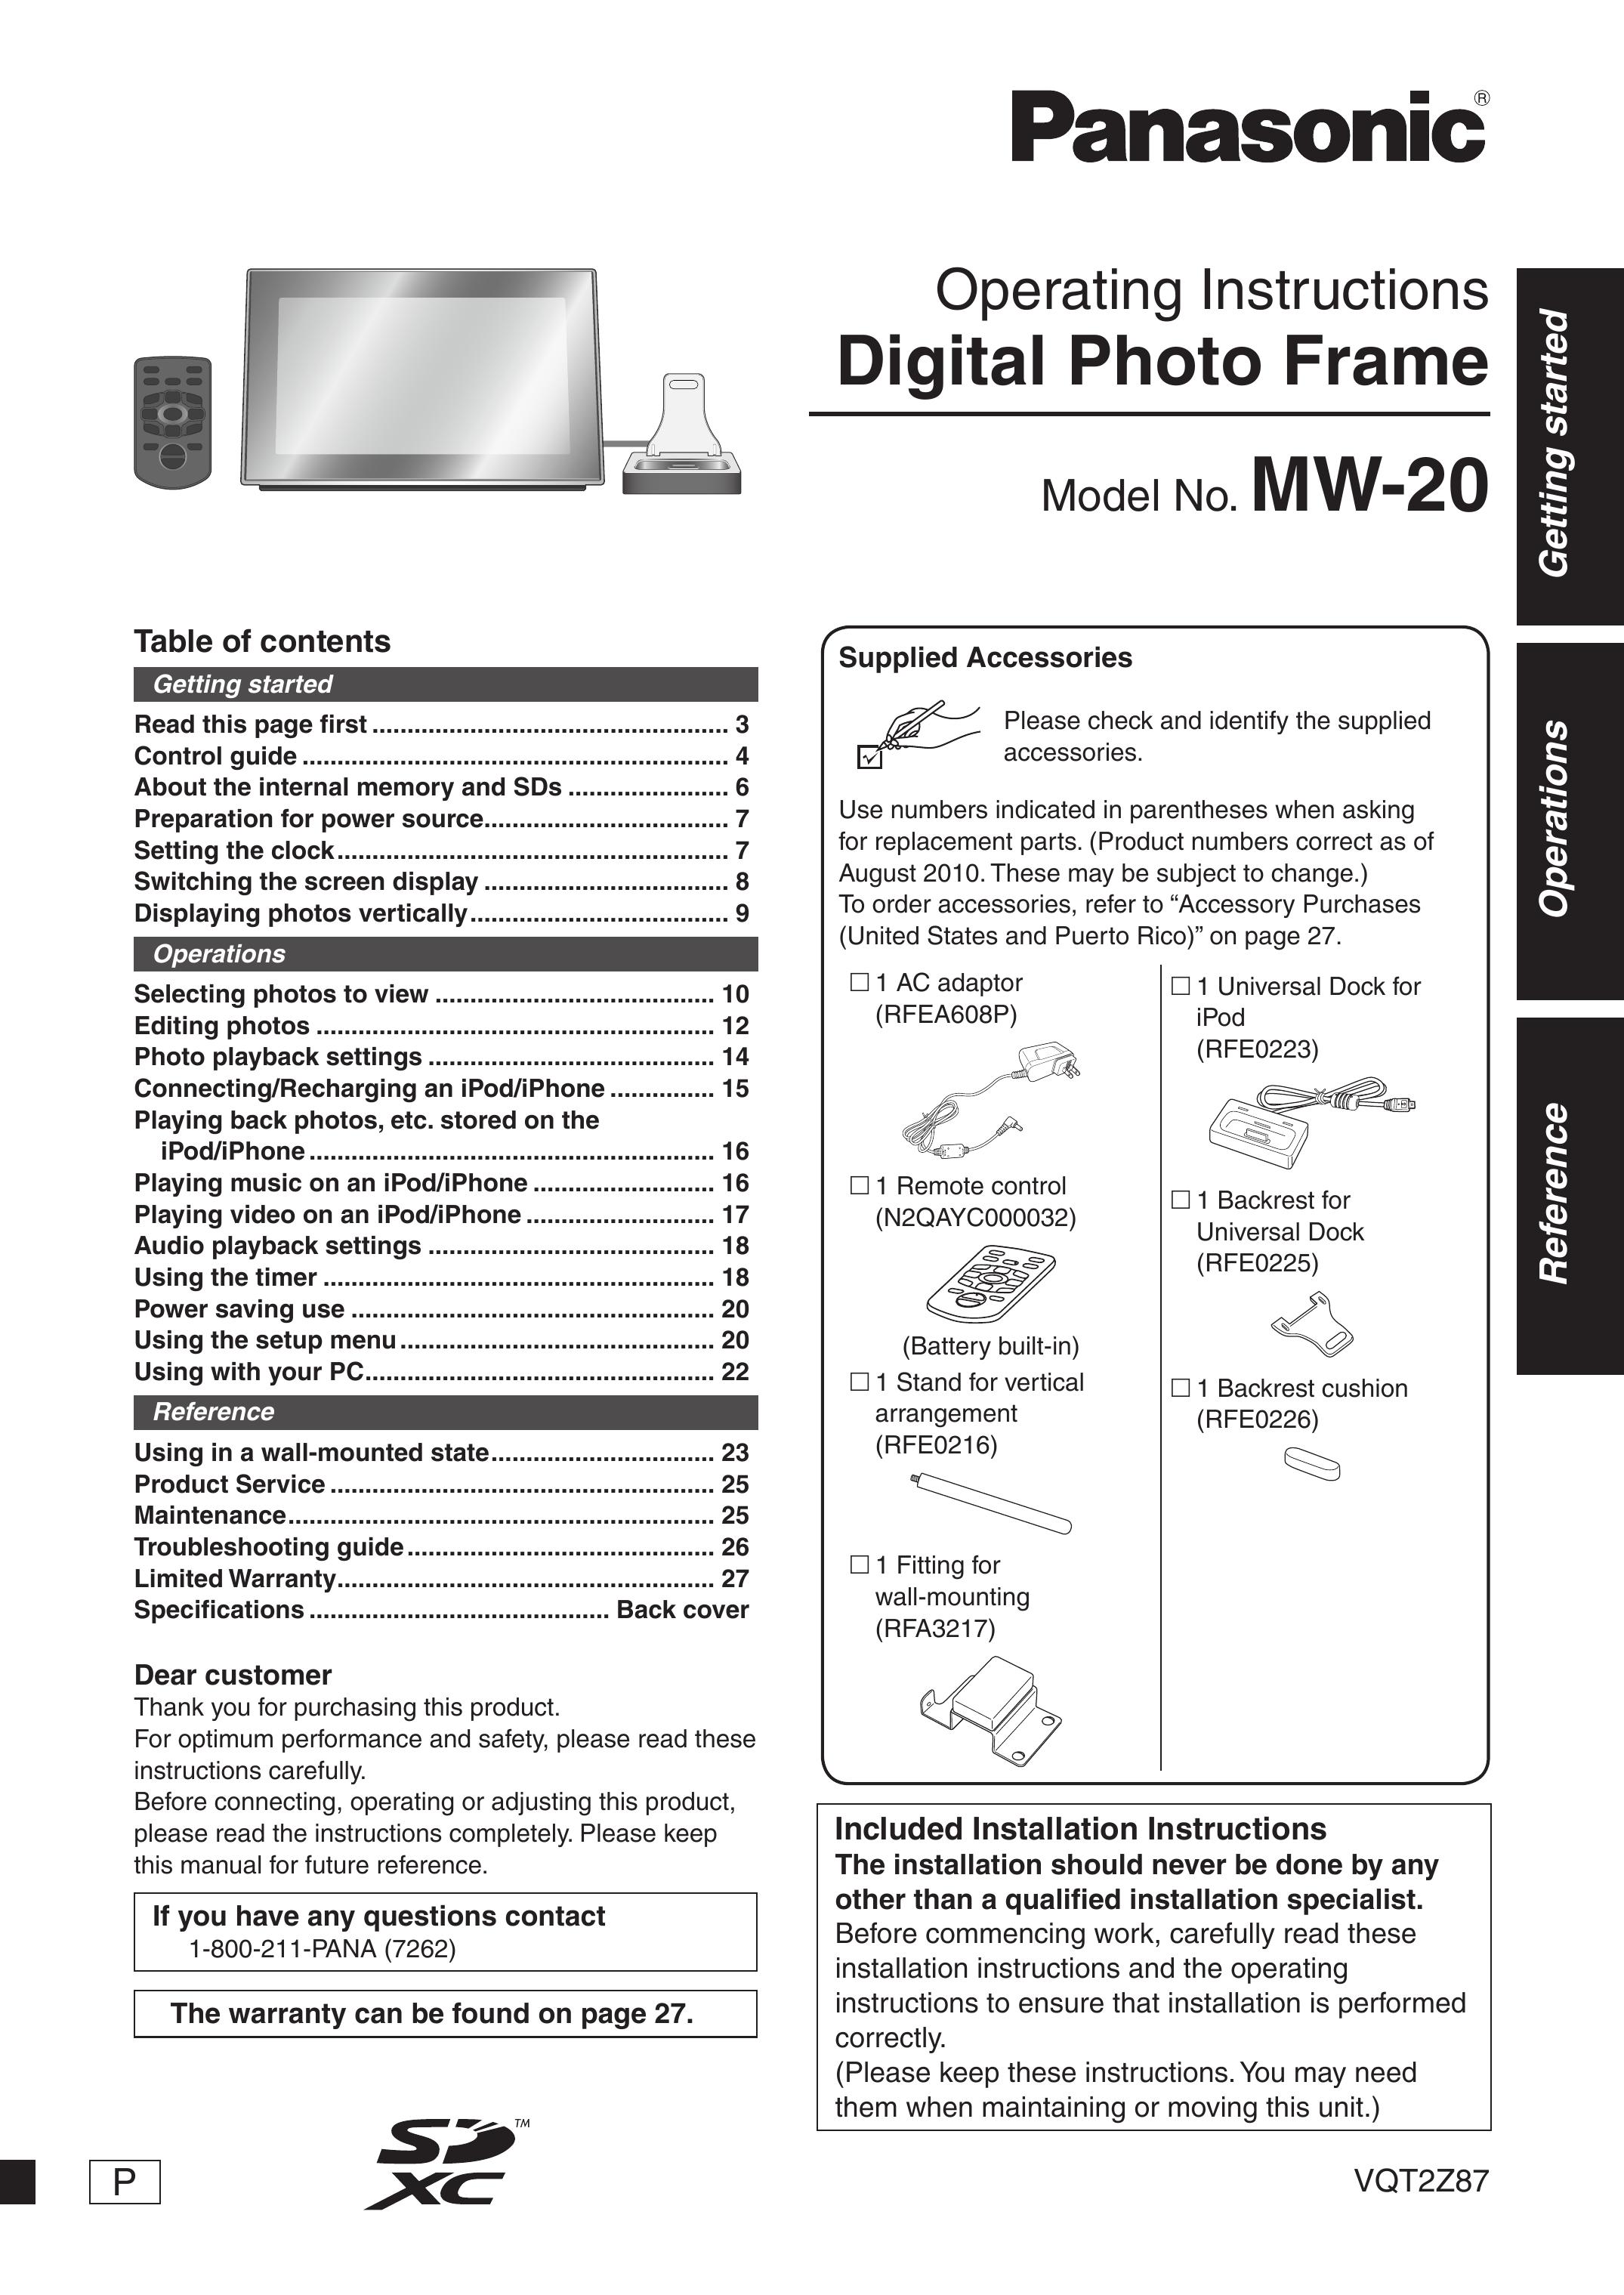 Panasonic MW-20 Digital Photo Frame User Manual